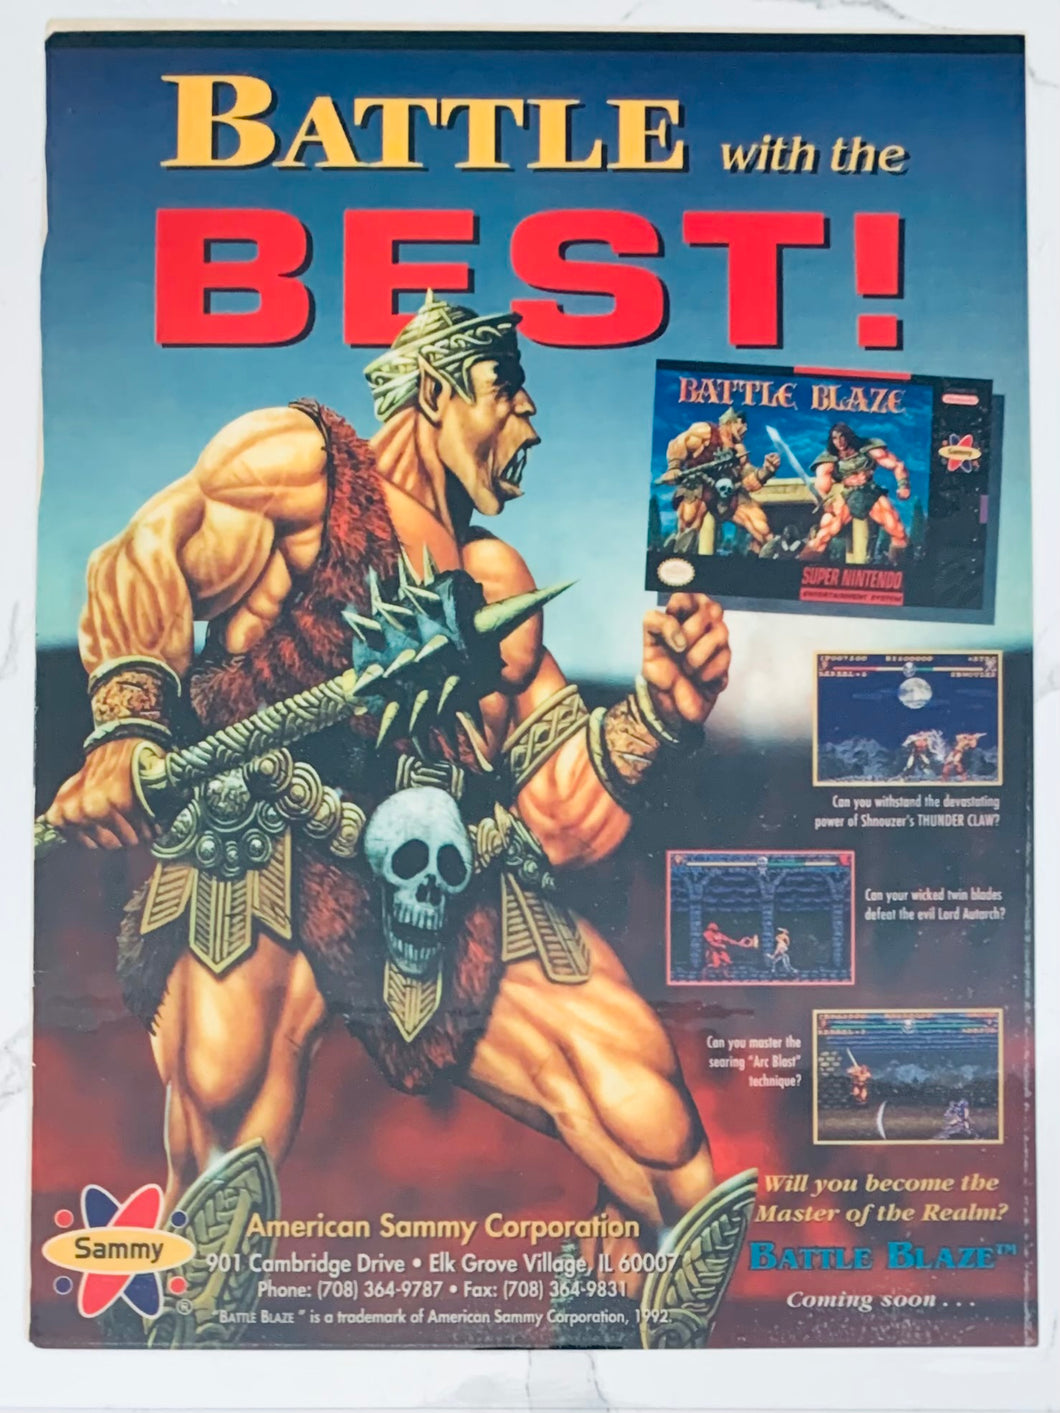 Battle Blaze - SNES - Original Vintage Advertisement - Print Ads - Laminated A4 Poster